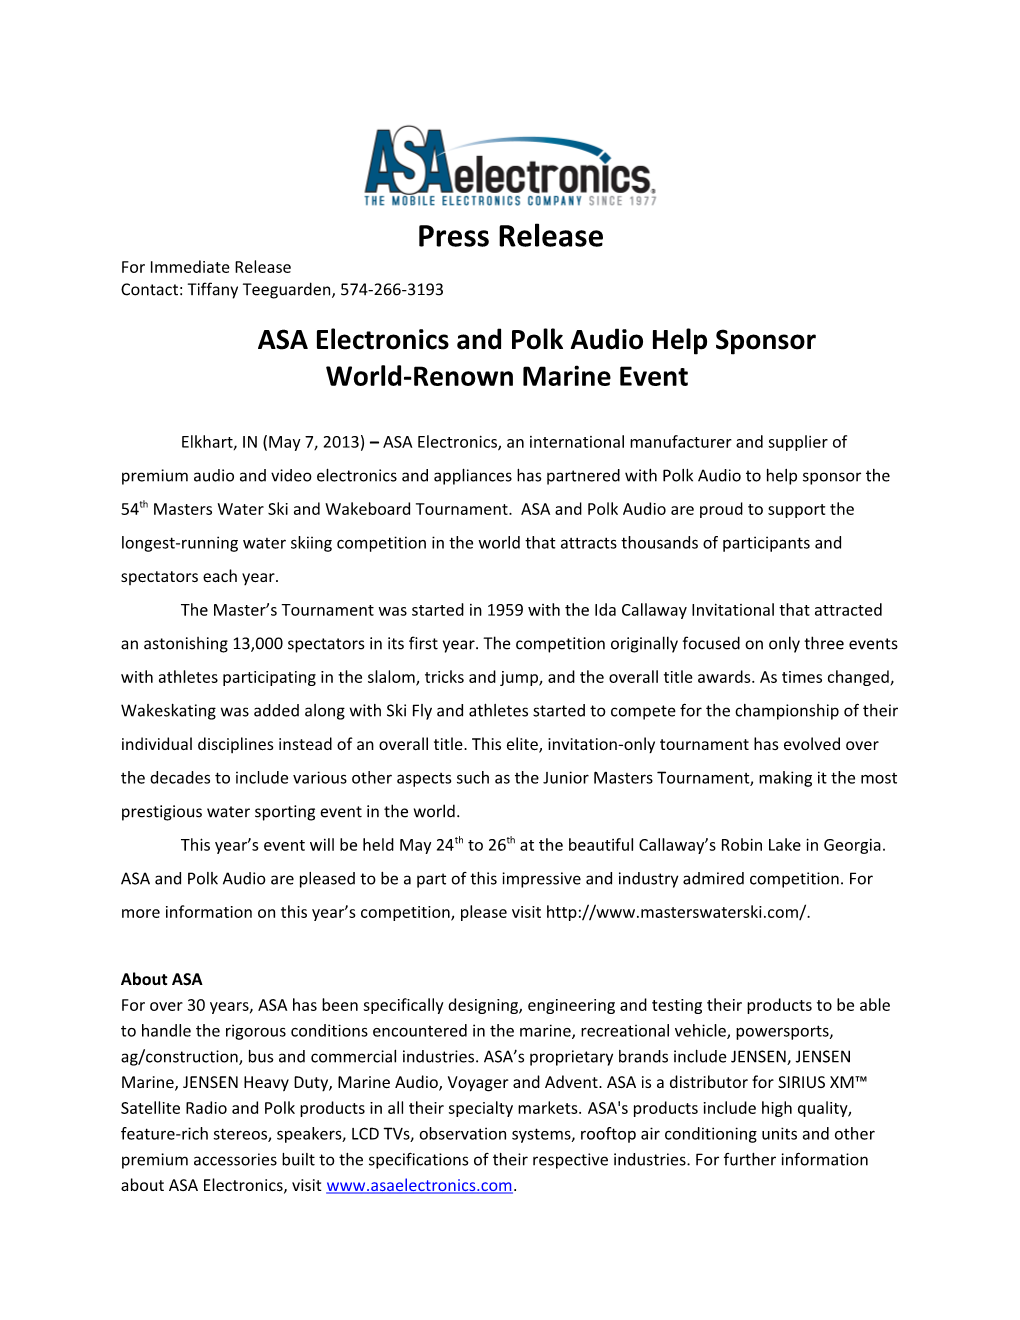 ASA Electronics and Polk Audio Help Sponsor